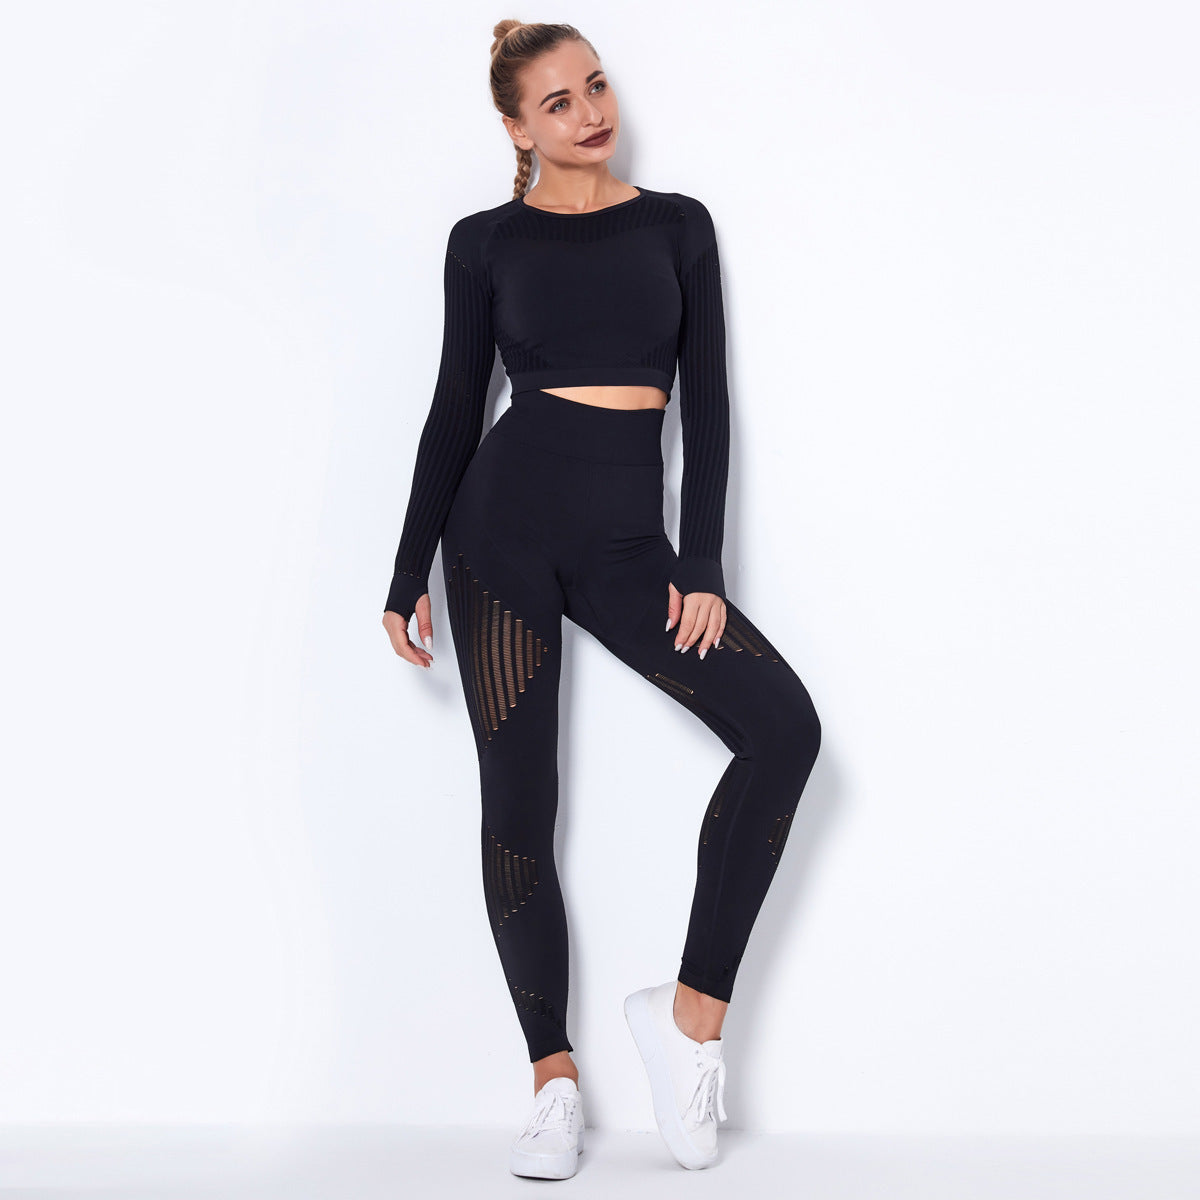 SORTYGO - Knitted Long Sleeve Yoga Wear Suit in Black